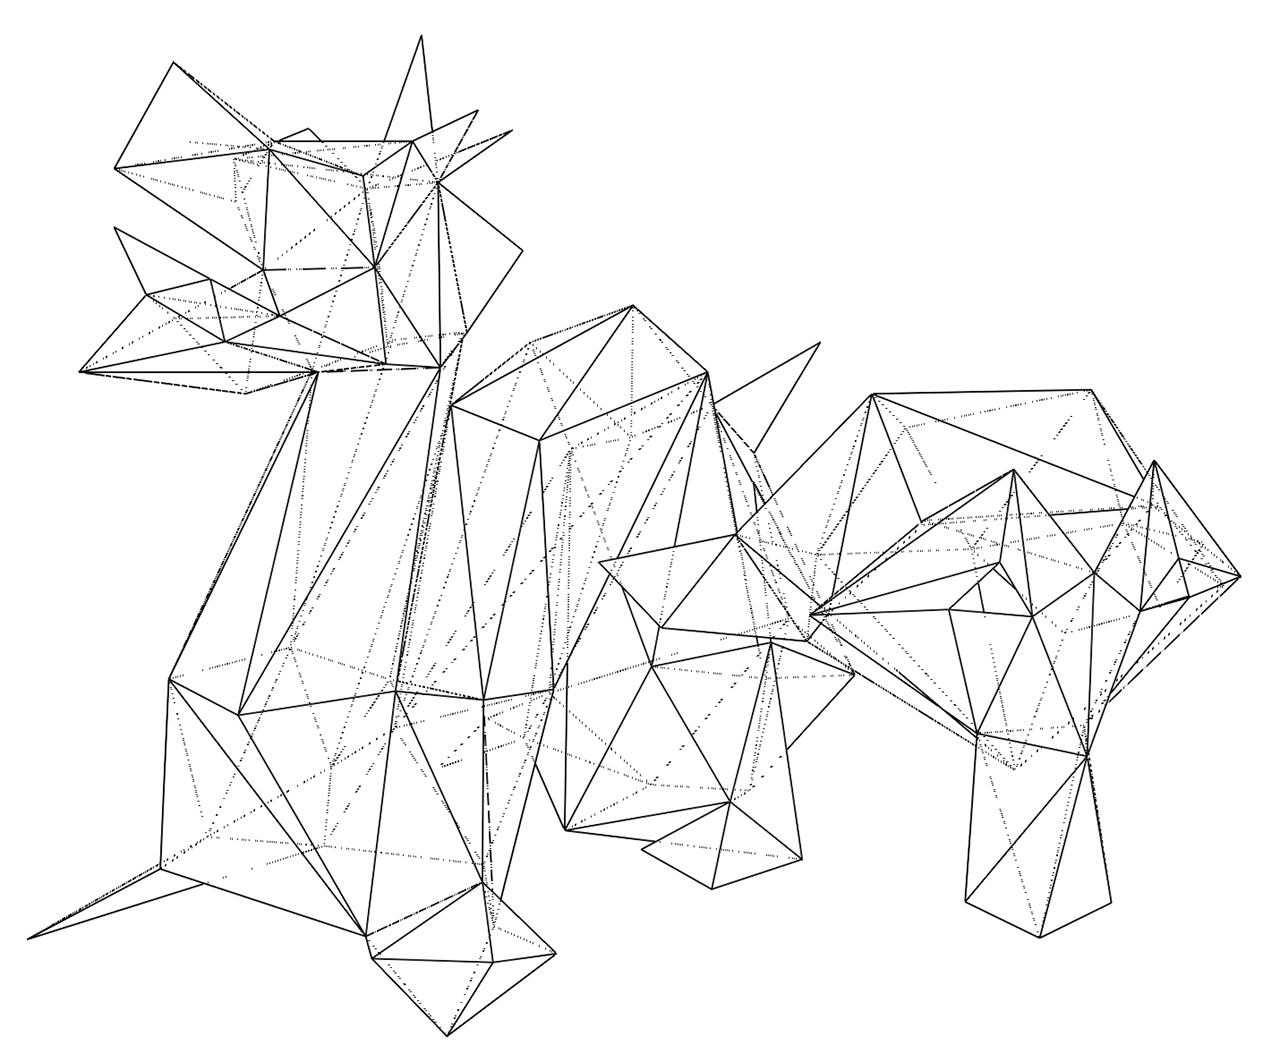 Geometry: 127 vertices, 316 edges, 189 faces